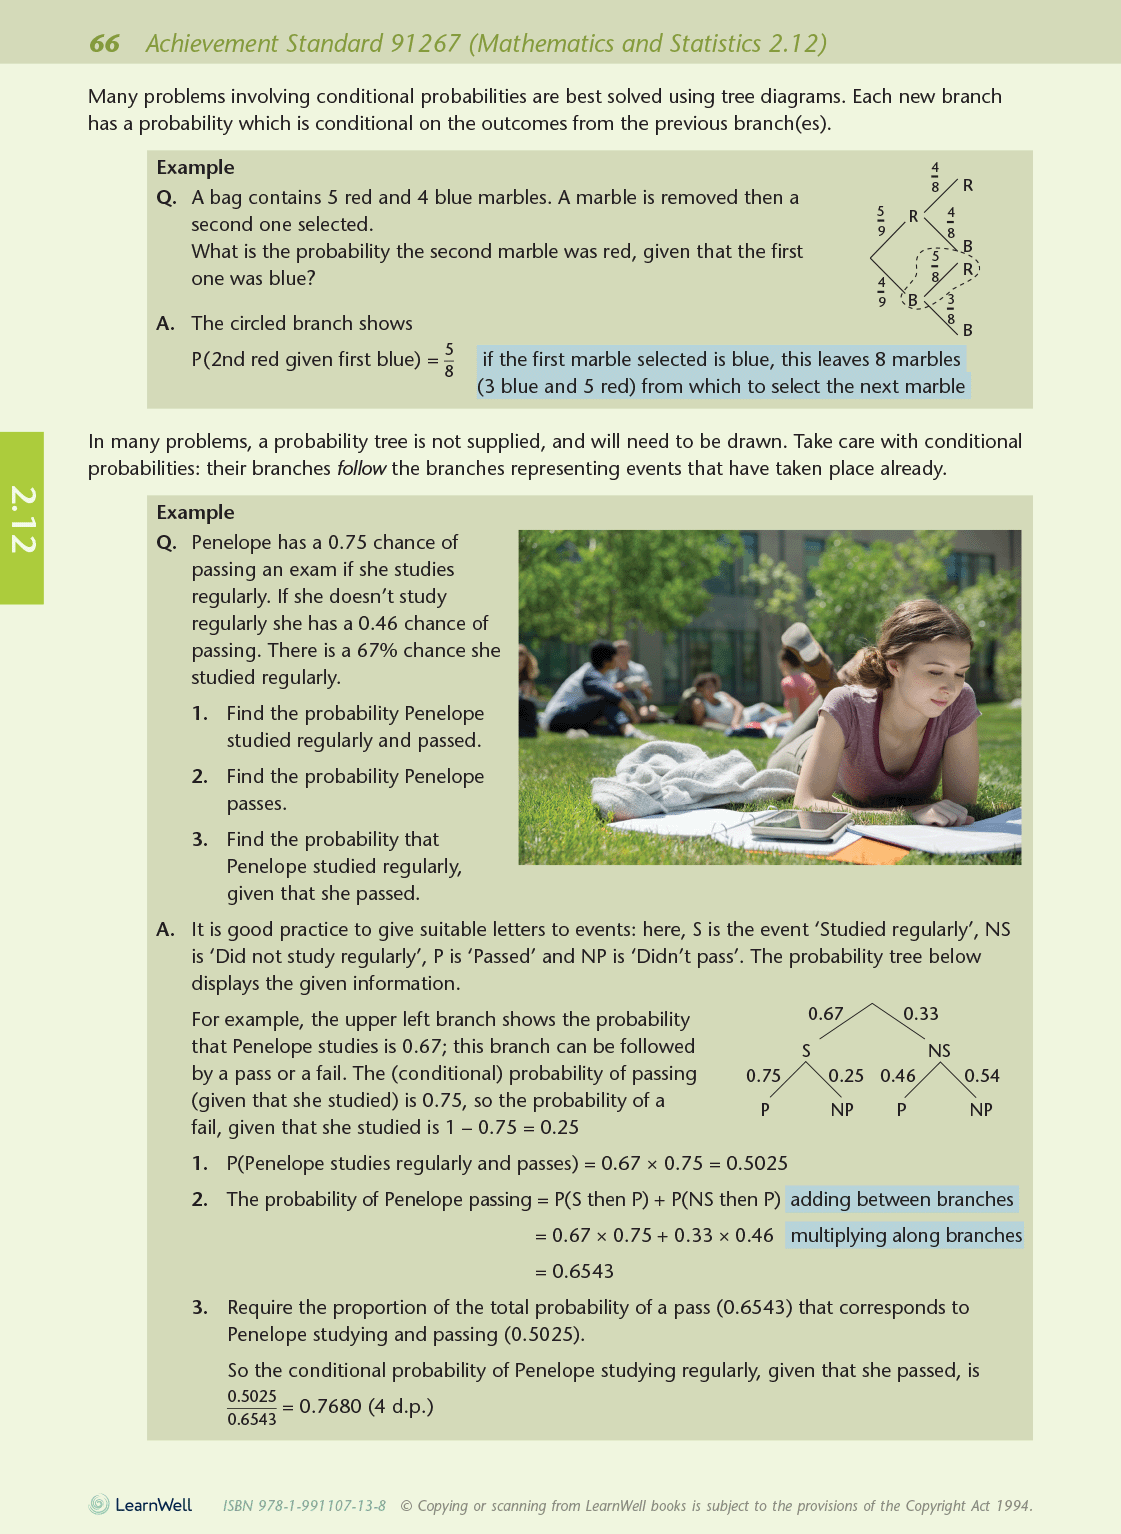 Level 2 Mathematics and Statistics AME Workbook